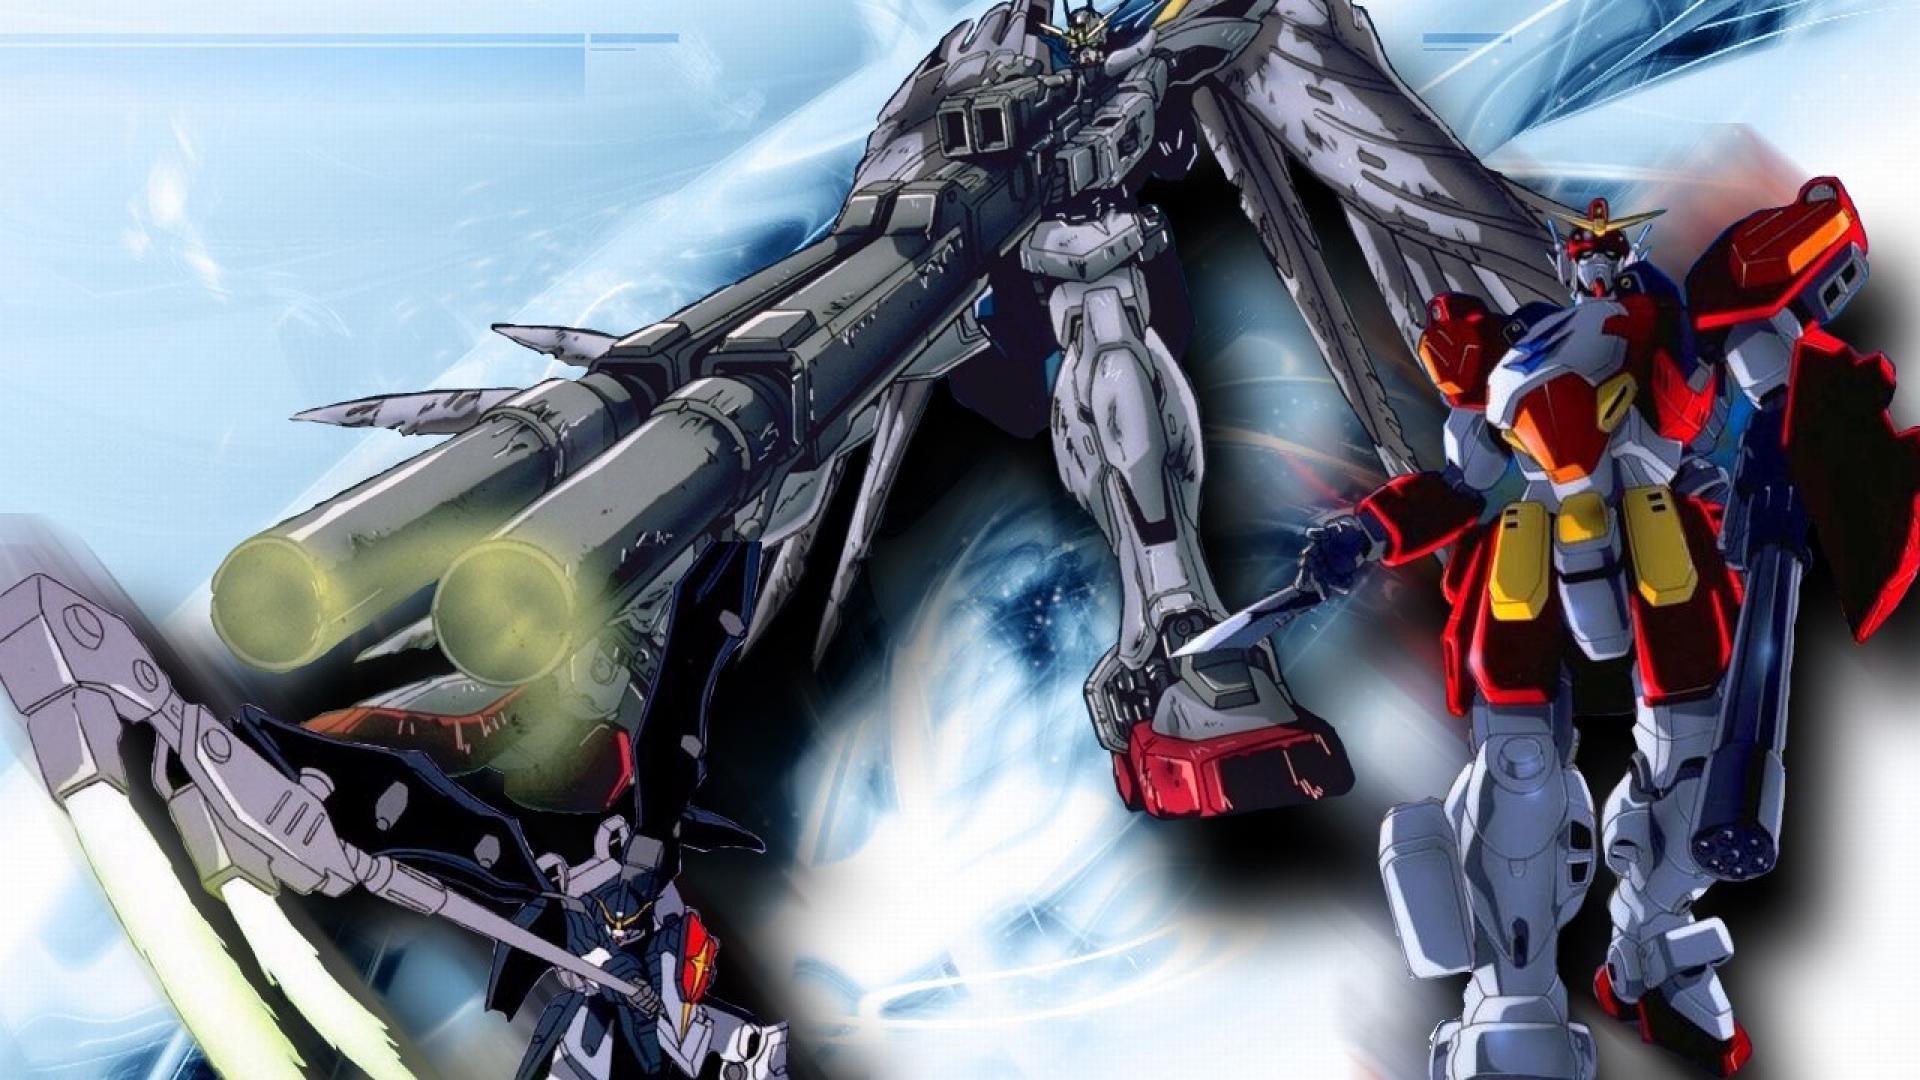 … Gundam Wing Wallpaper Hd5 600×338. Download